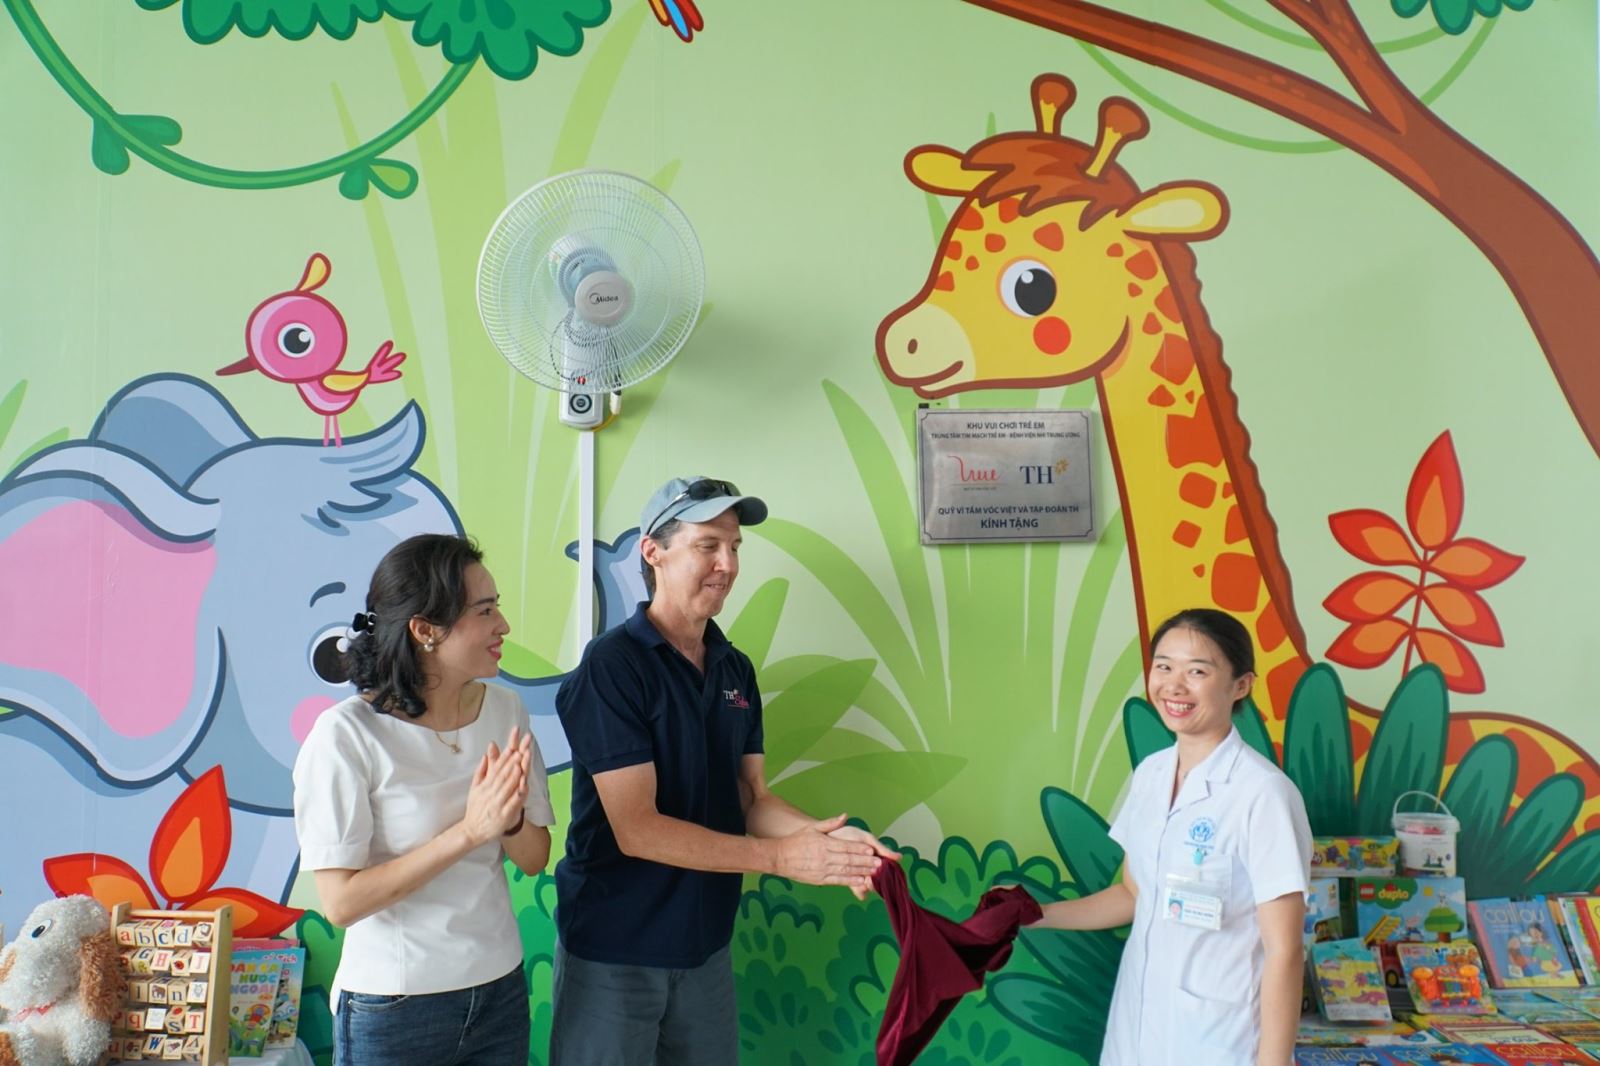 Children's room in Vietnam National Children's Hospital opened